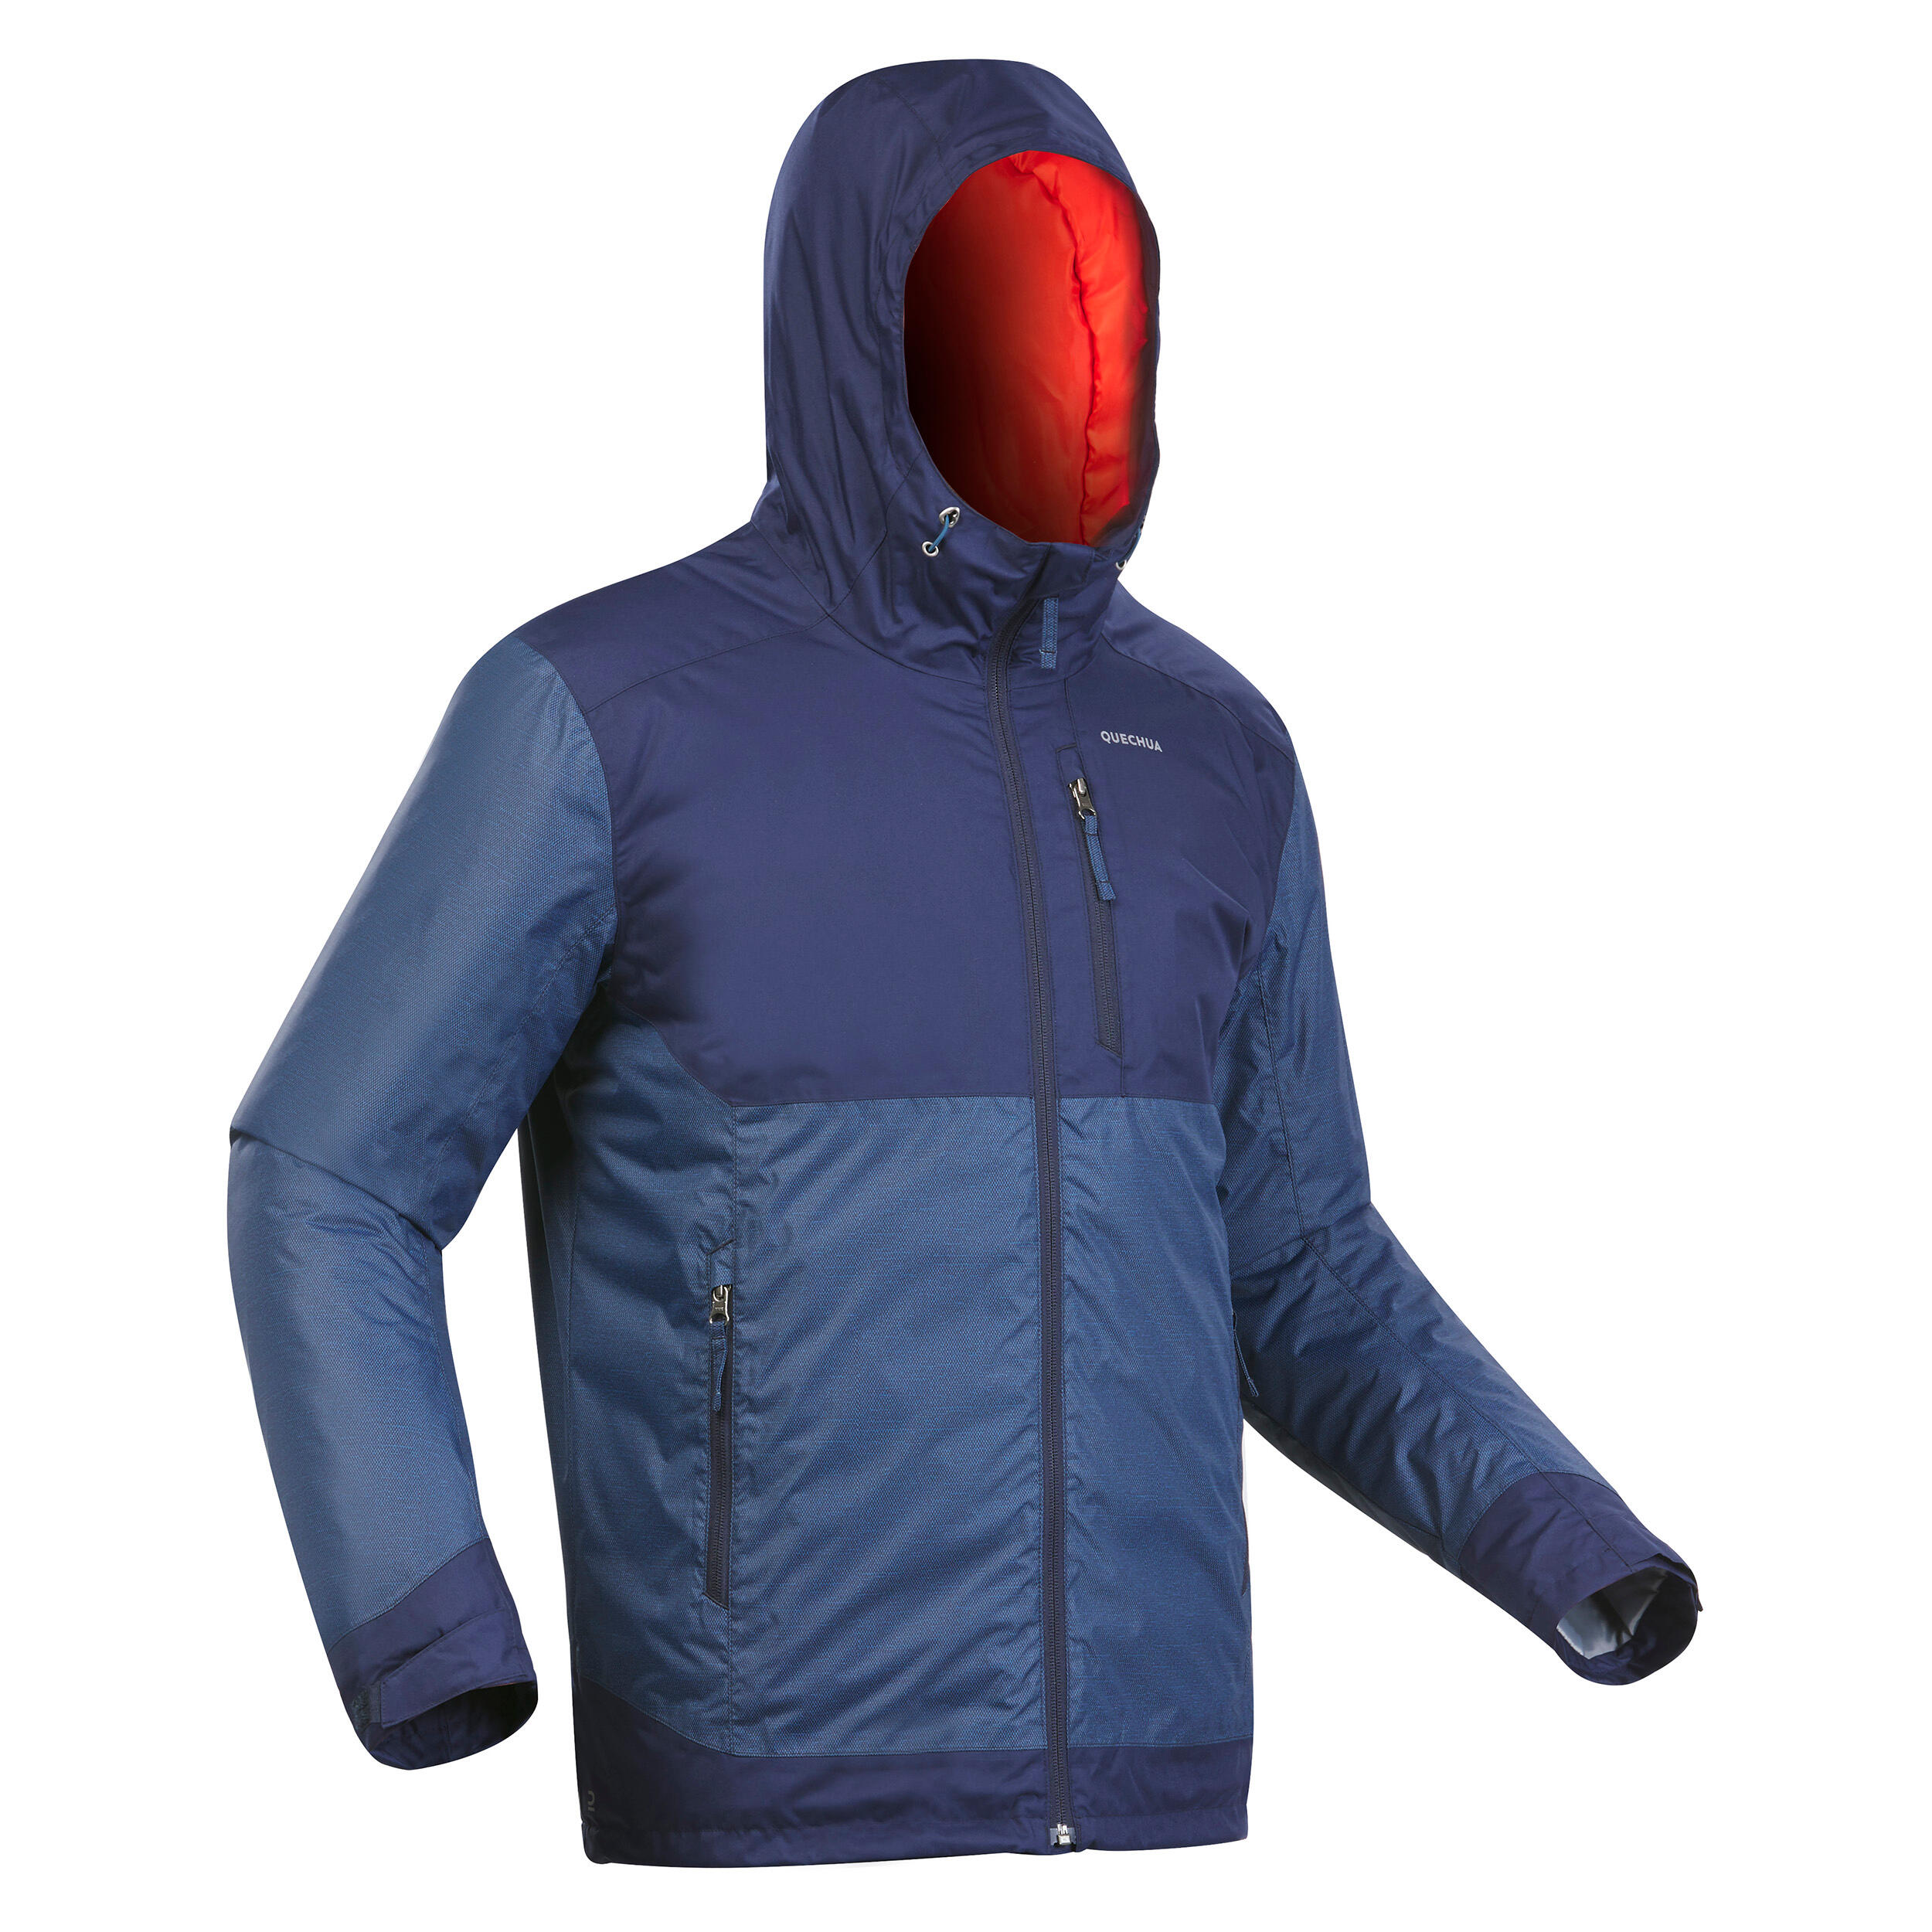 Men’s hiking waterproof winter jacket - SH500 -10°C 13/23